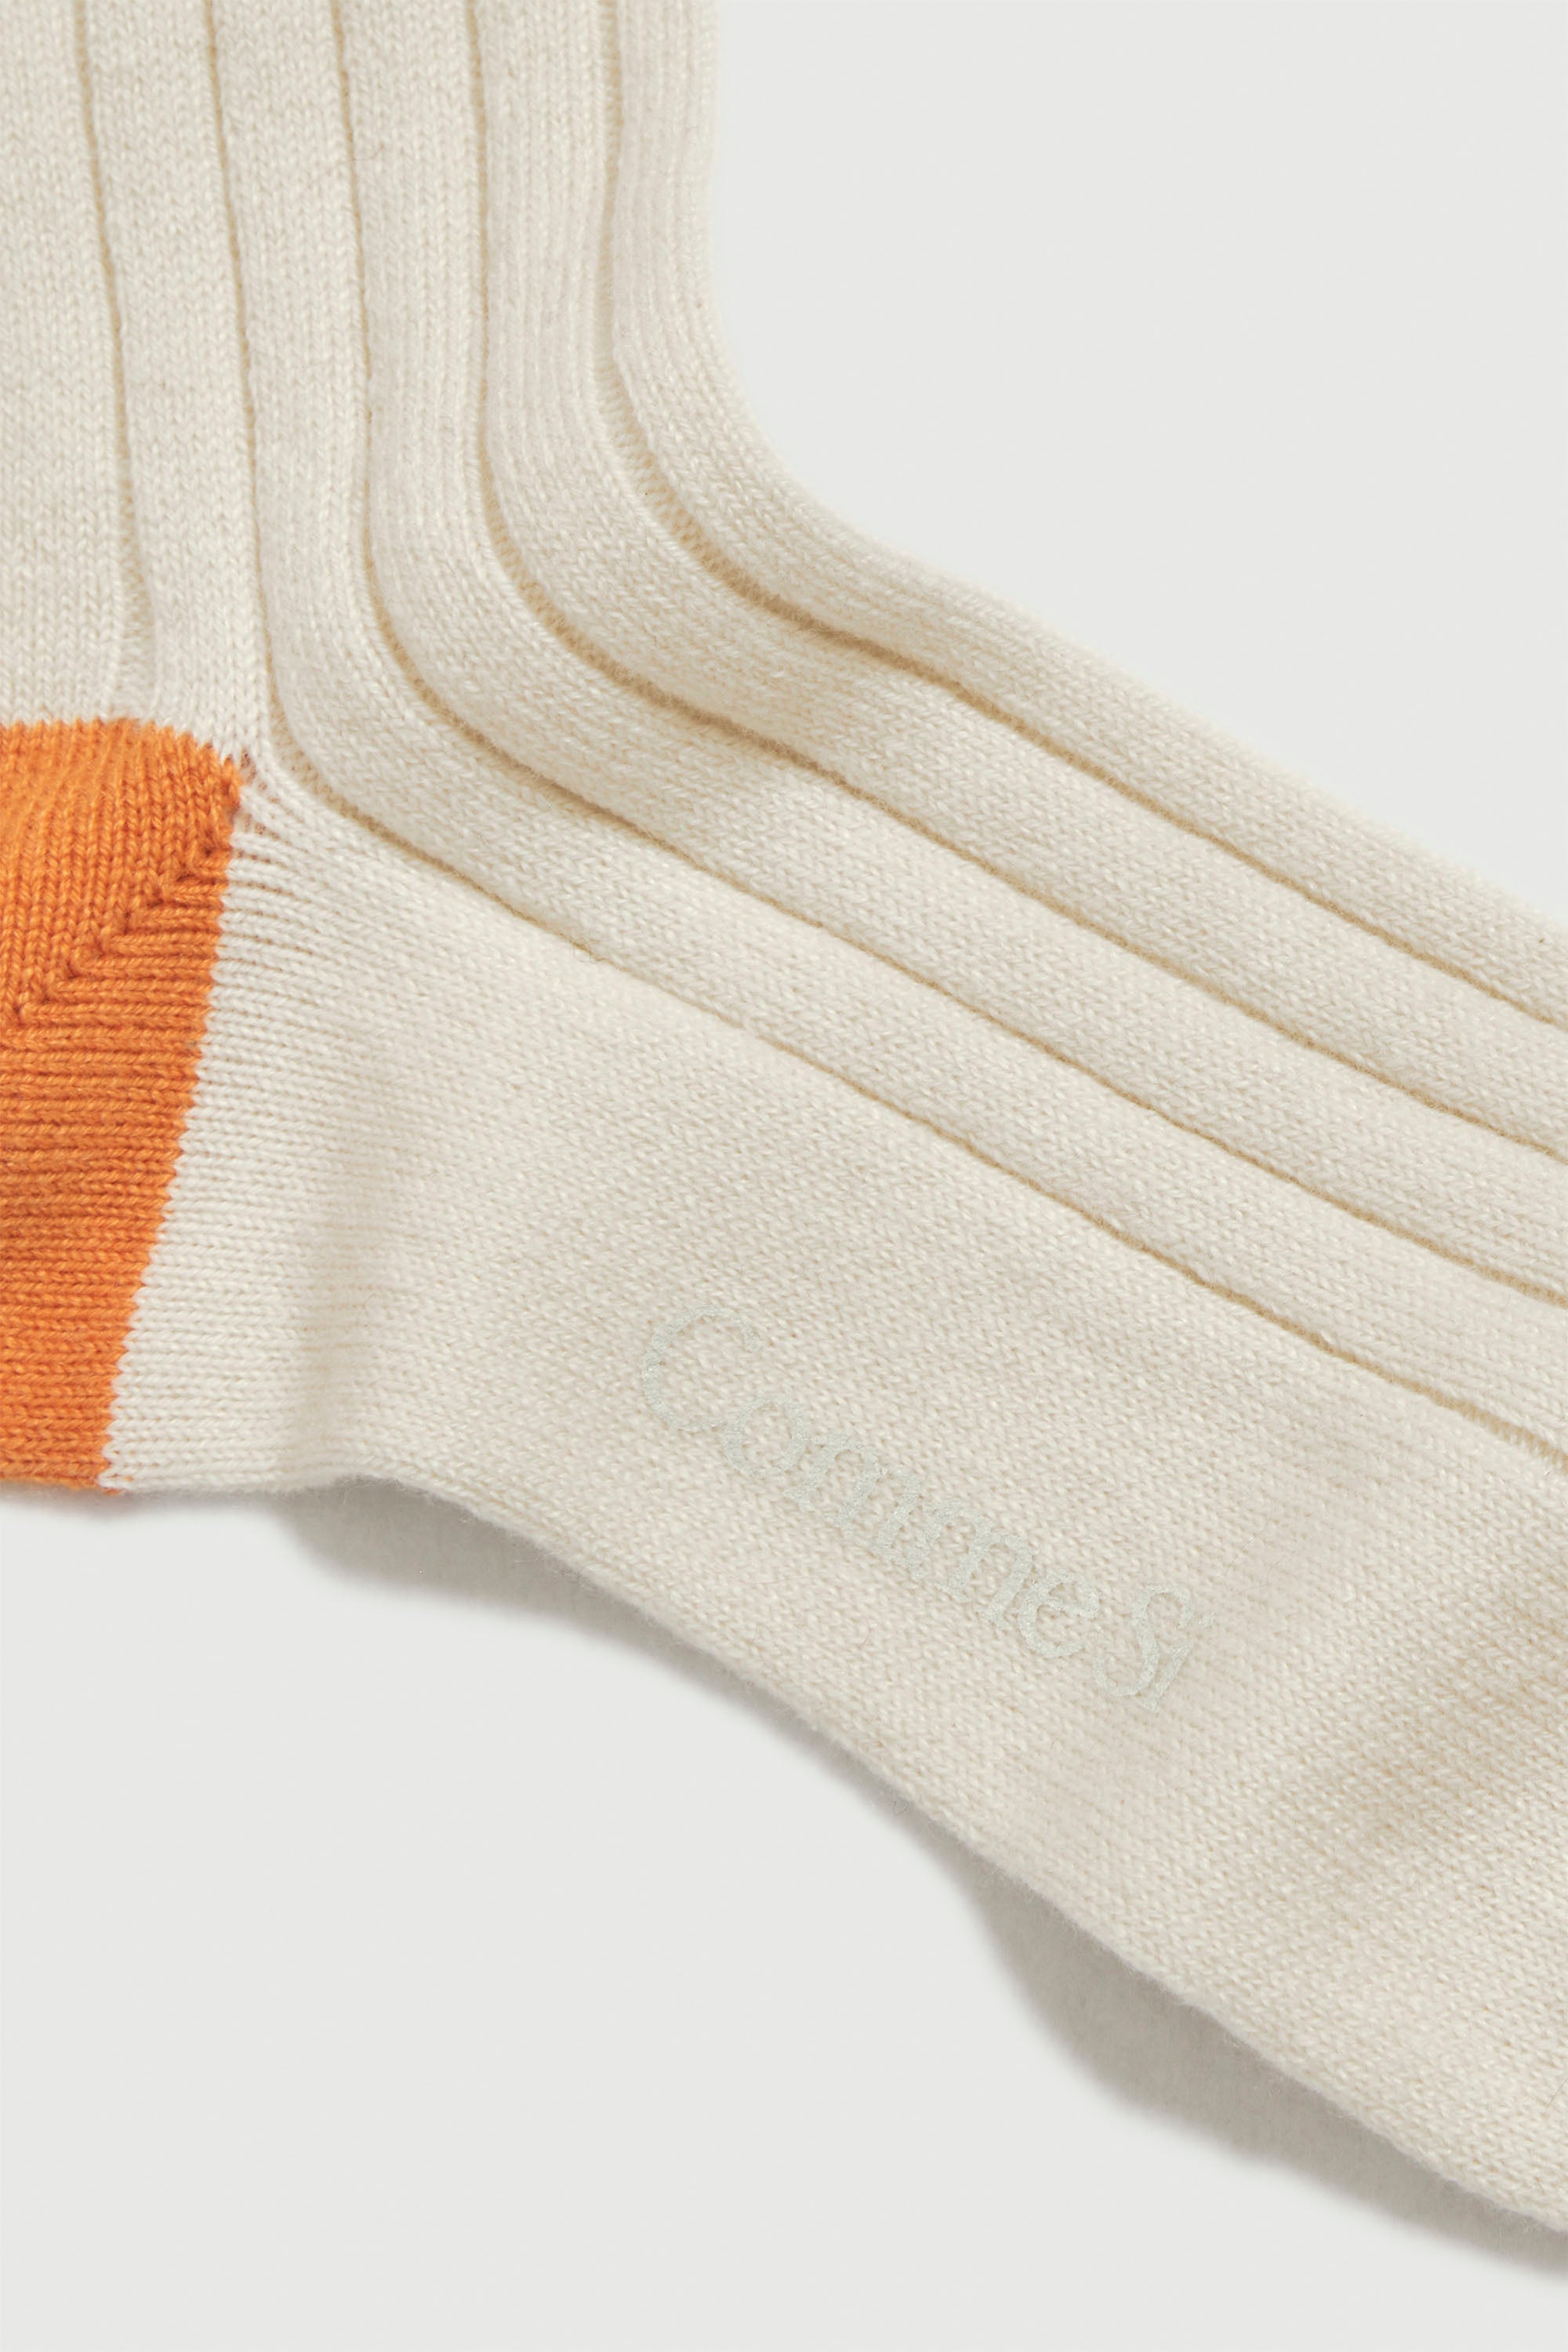 Footbed detail, The Danielle Sock, Color Block, Cashmere, Cream Tangerine